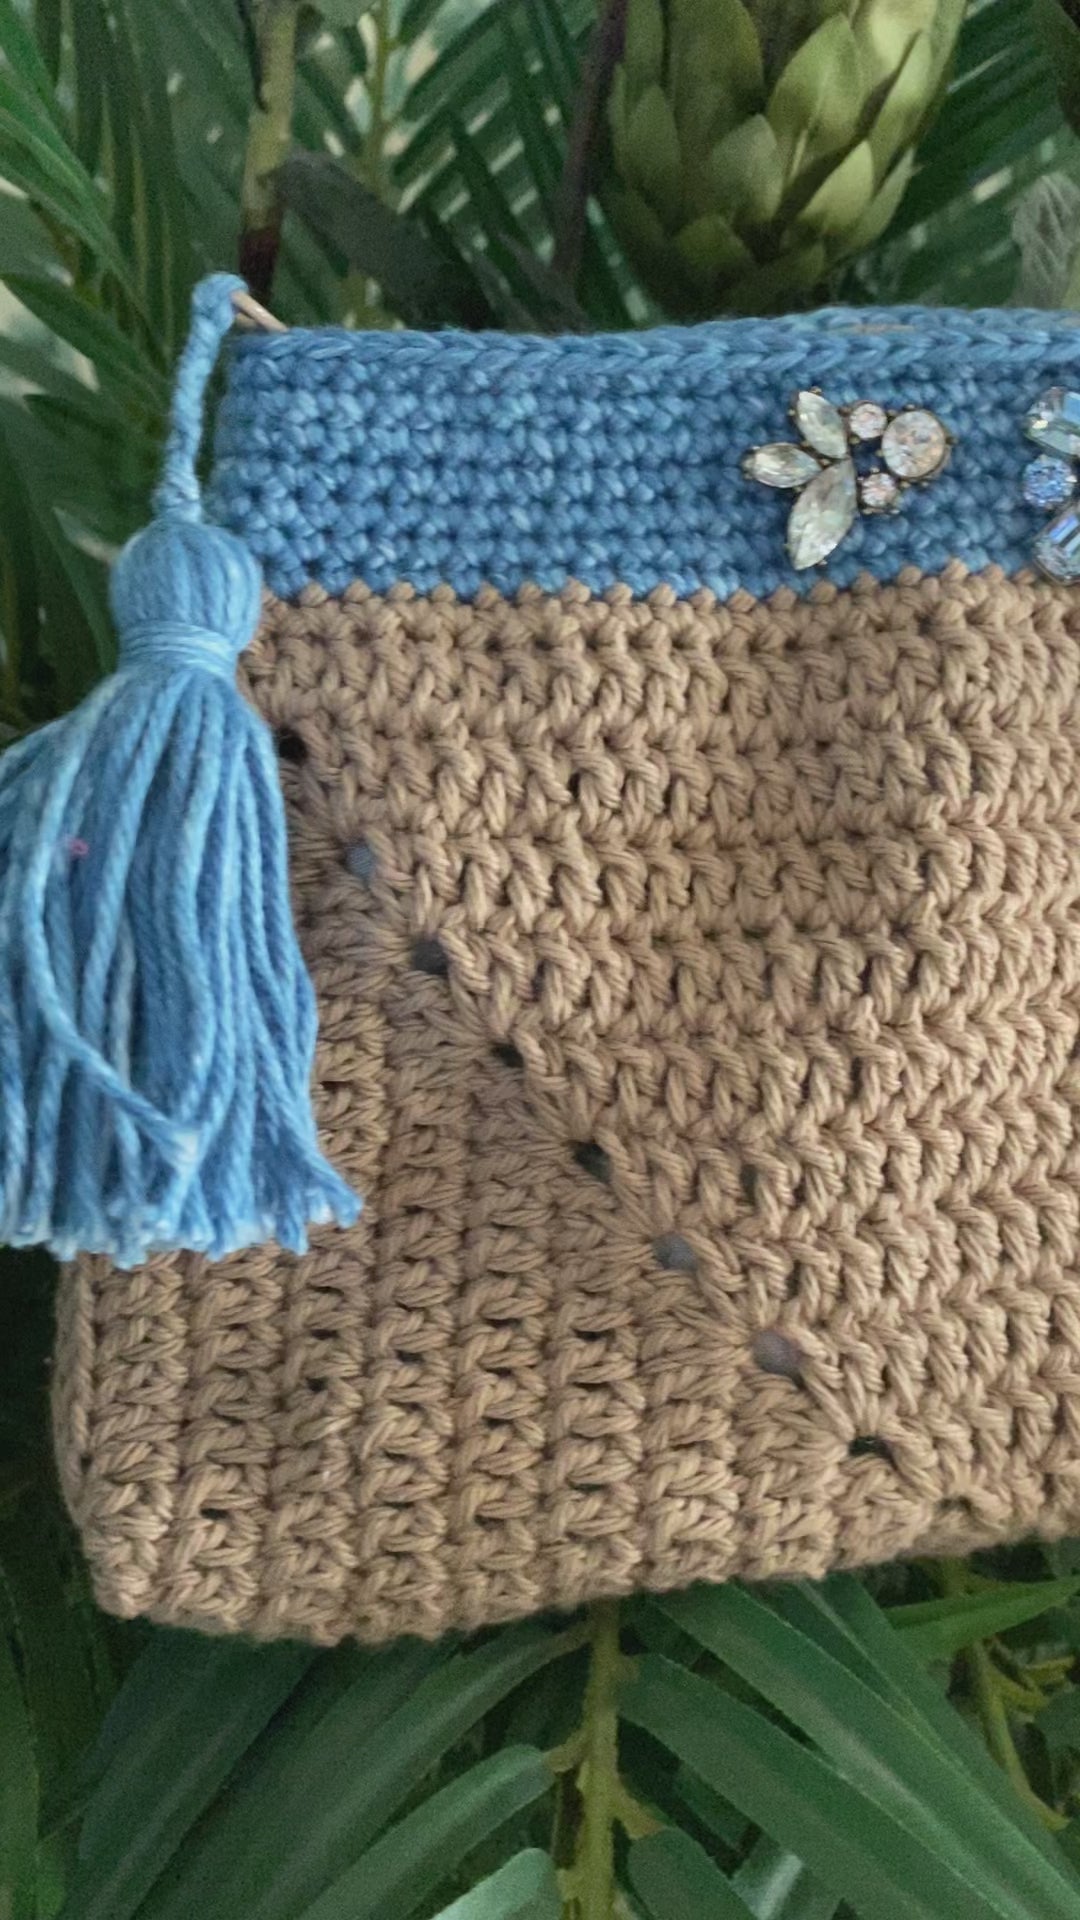 Crochet clutch bag with vintage rhinestones - Lagoon